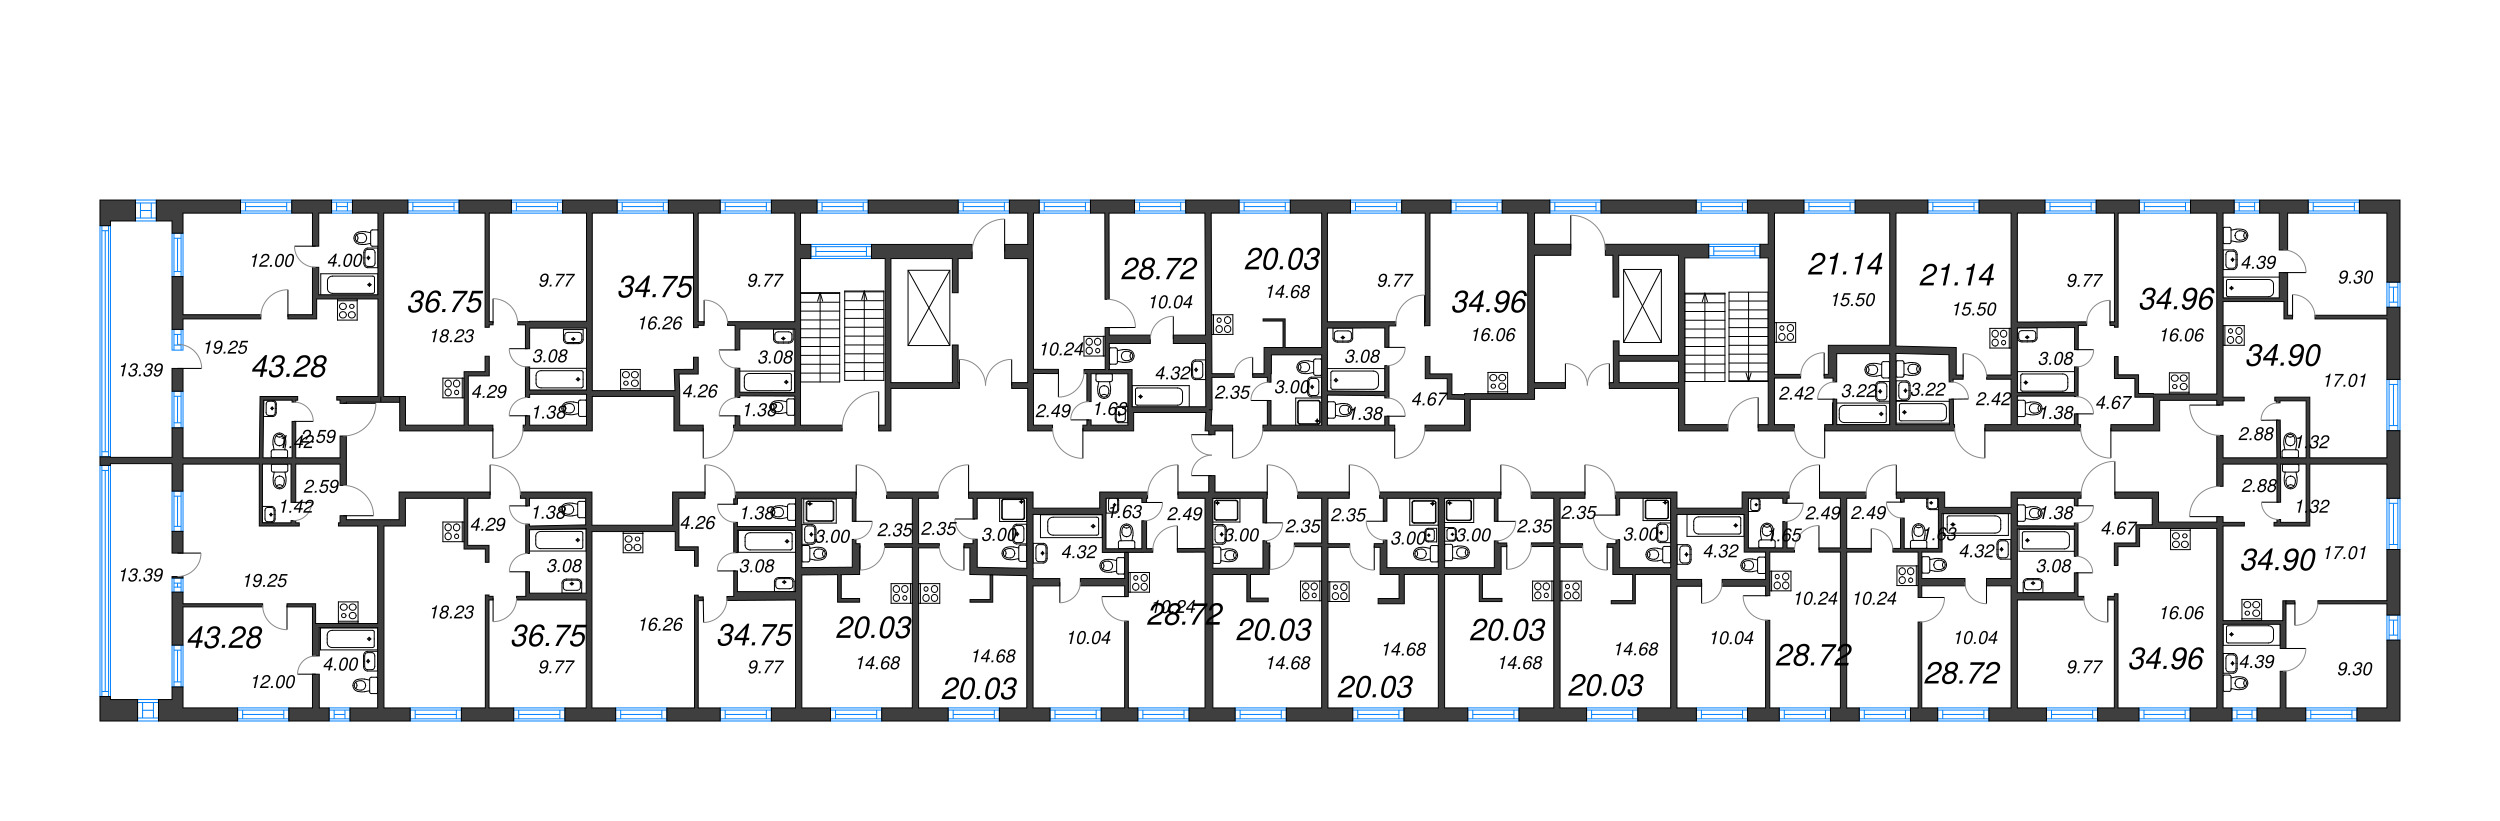 2-комнатная (Евро) квартира, 34.75 м² - планировка этажа